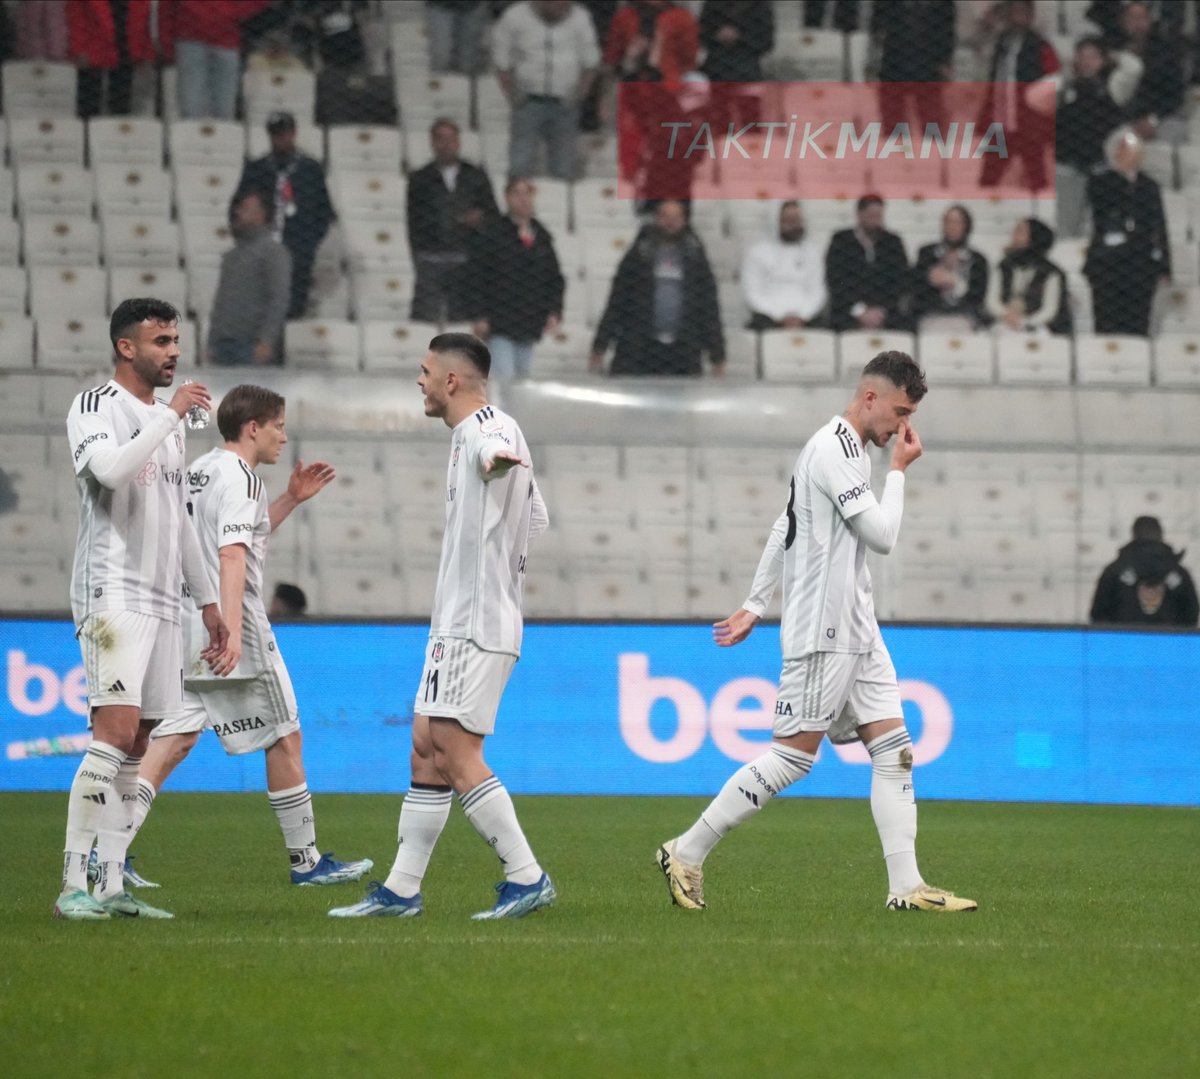 İLK YARI SONUCU | Beşiktaş 1-0 Ankaragücü ⚽️ 18' Muci